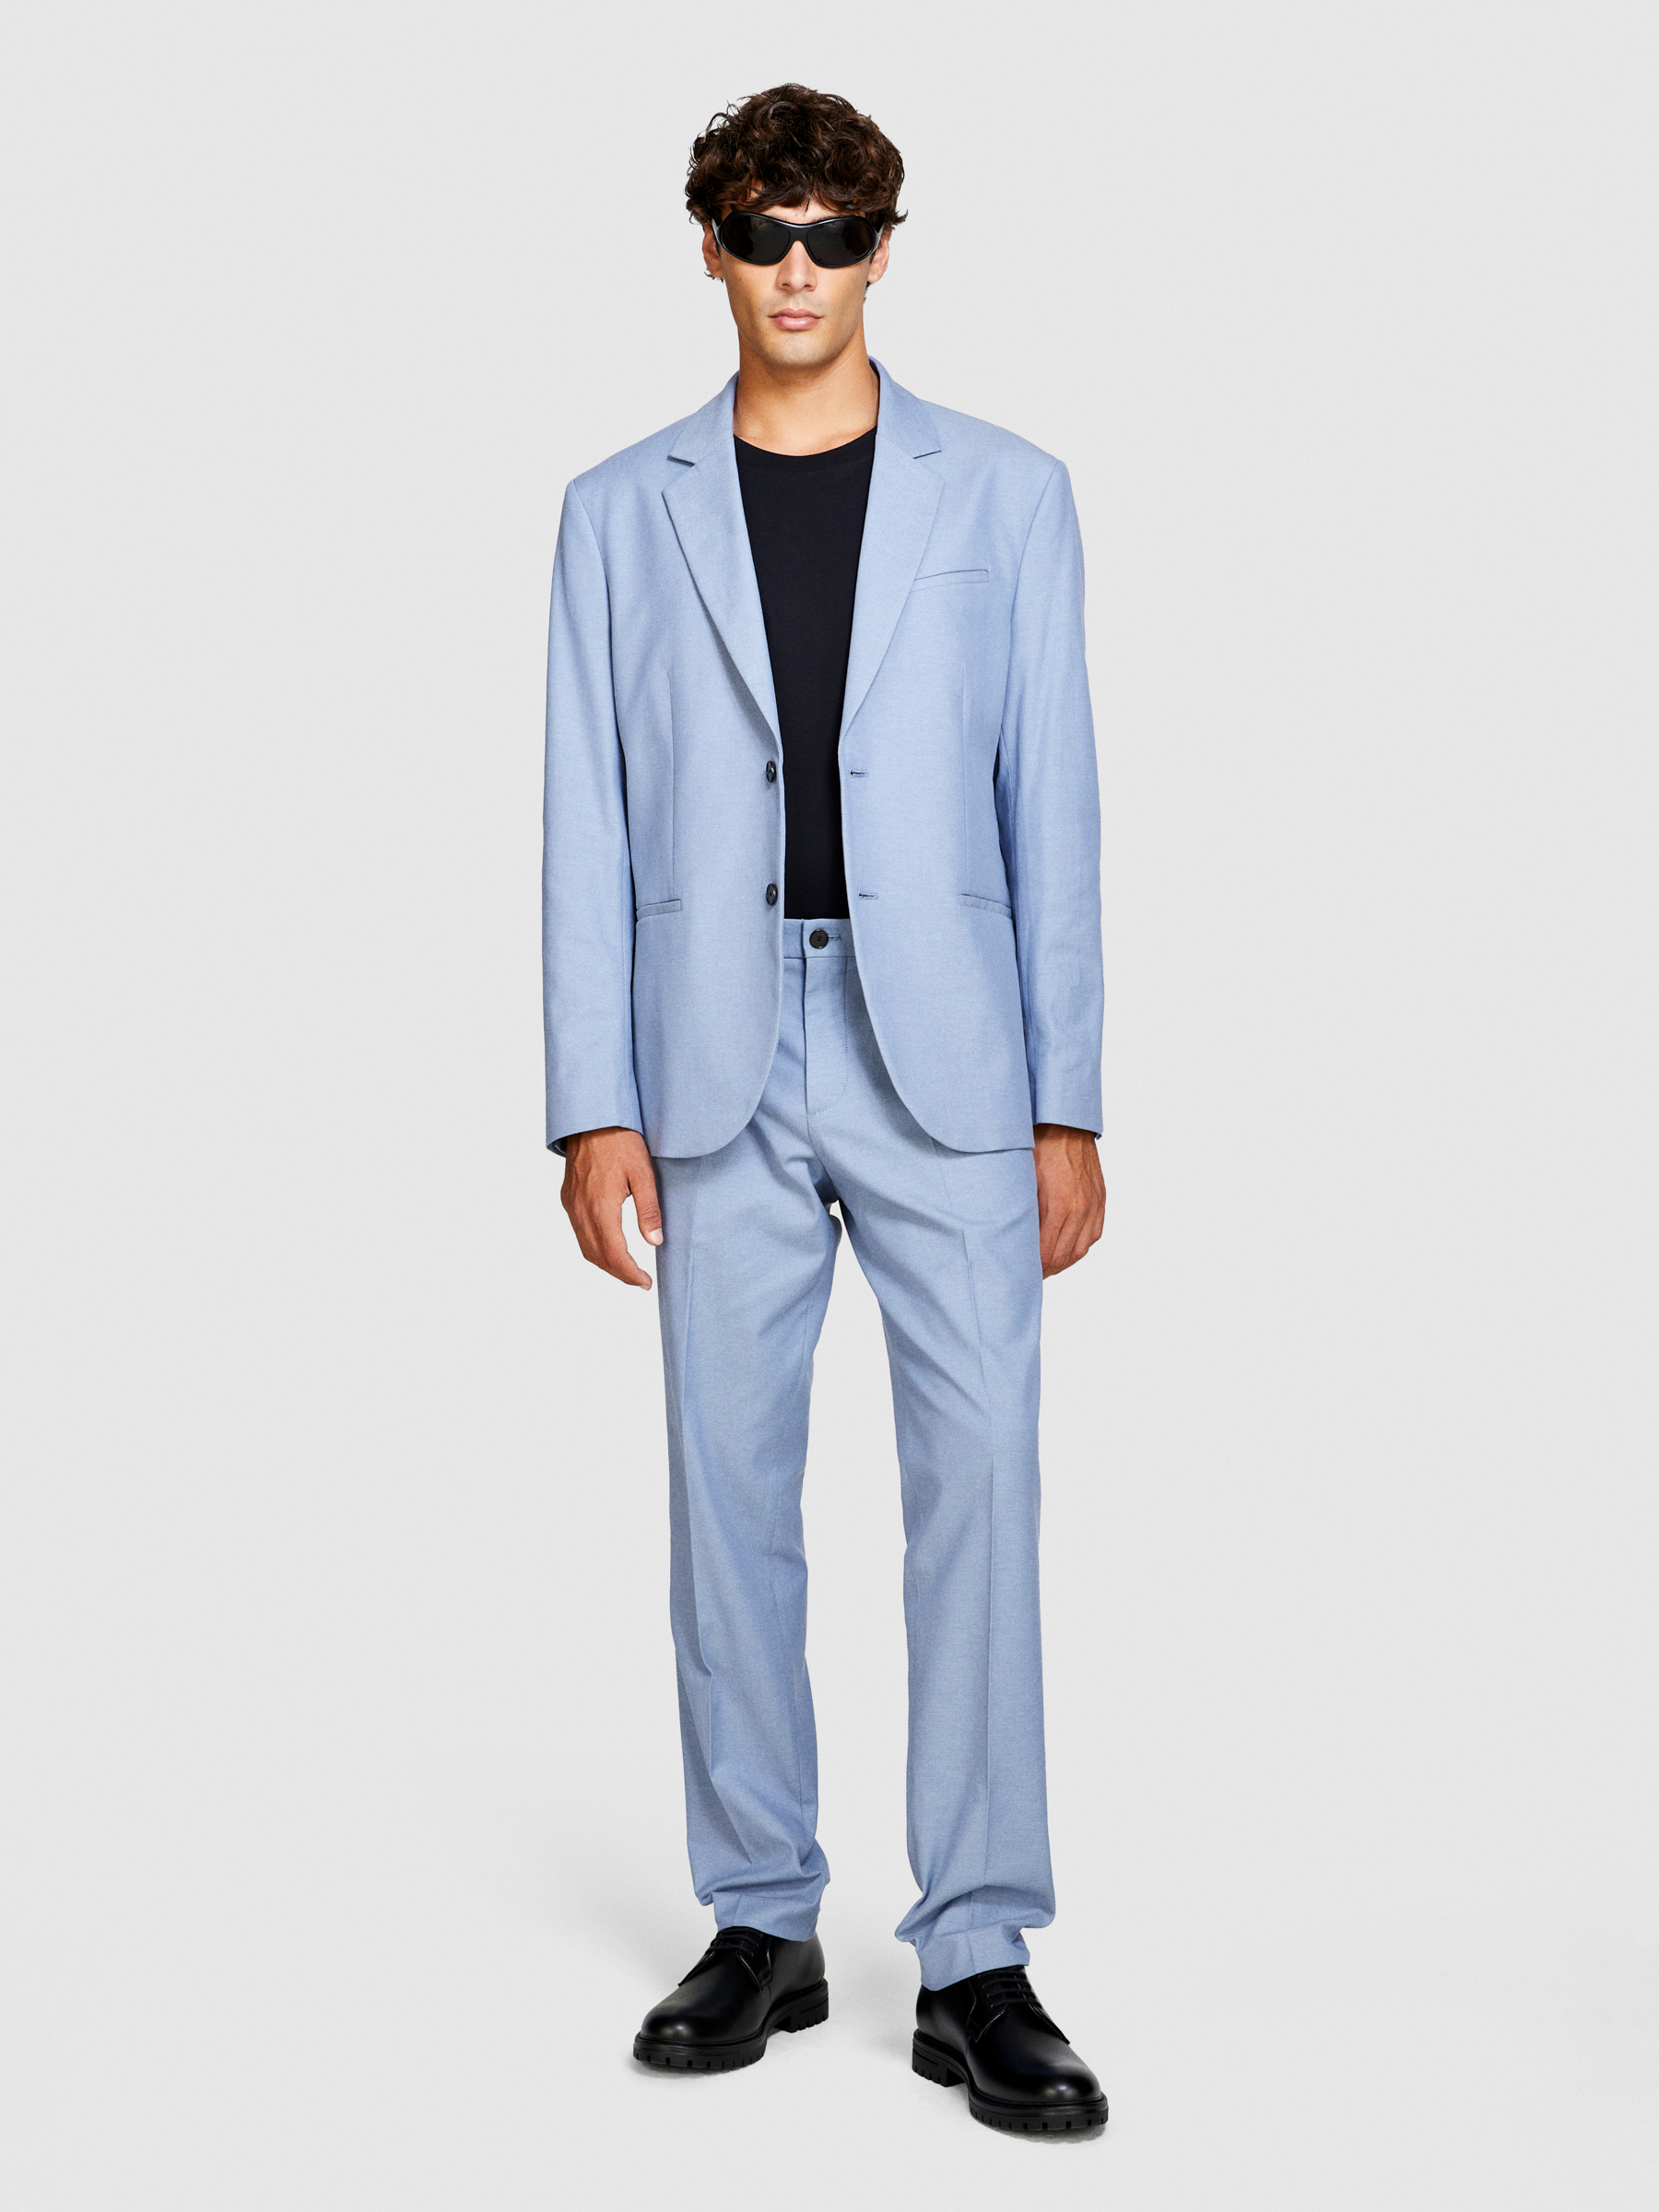 Sisley - Yarn Dyed Blazer, Man, Light Blue, Size: 46